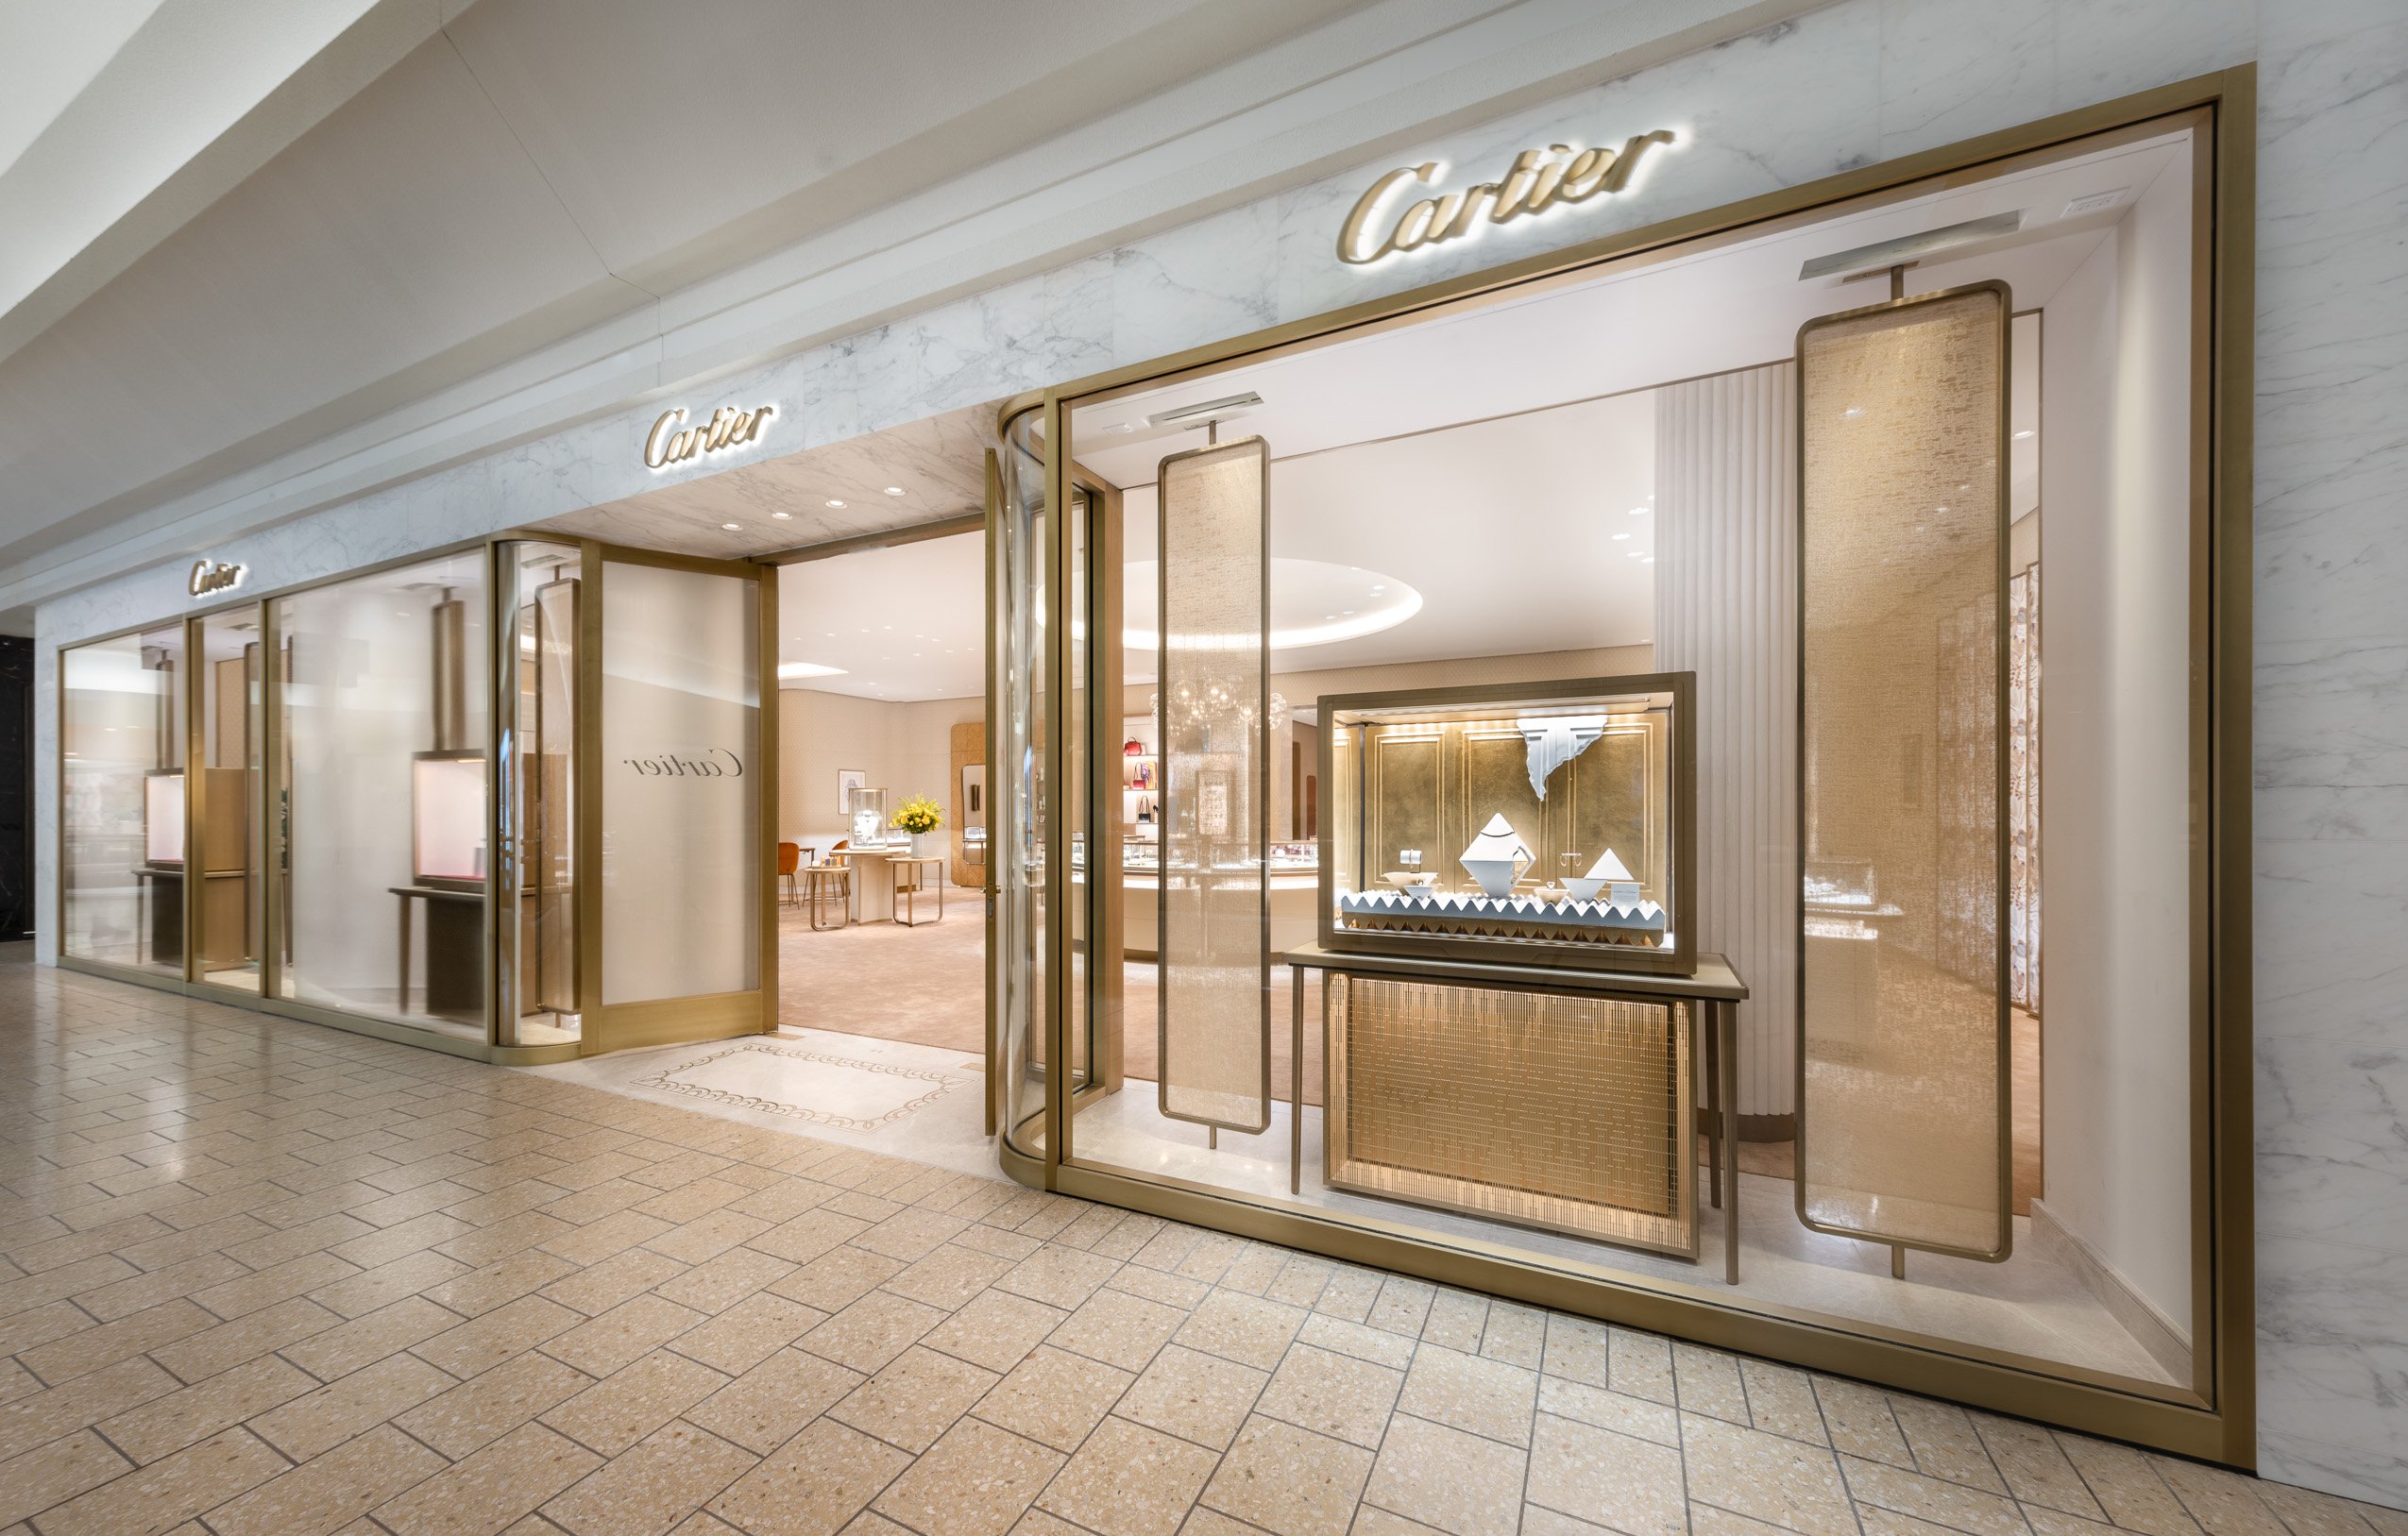 Take a Look Inside Cartier's New Hudson Yards Store – JCK